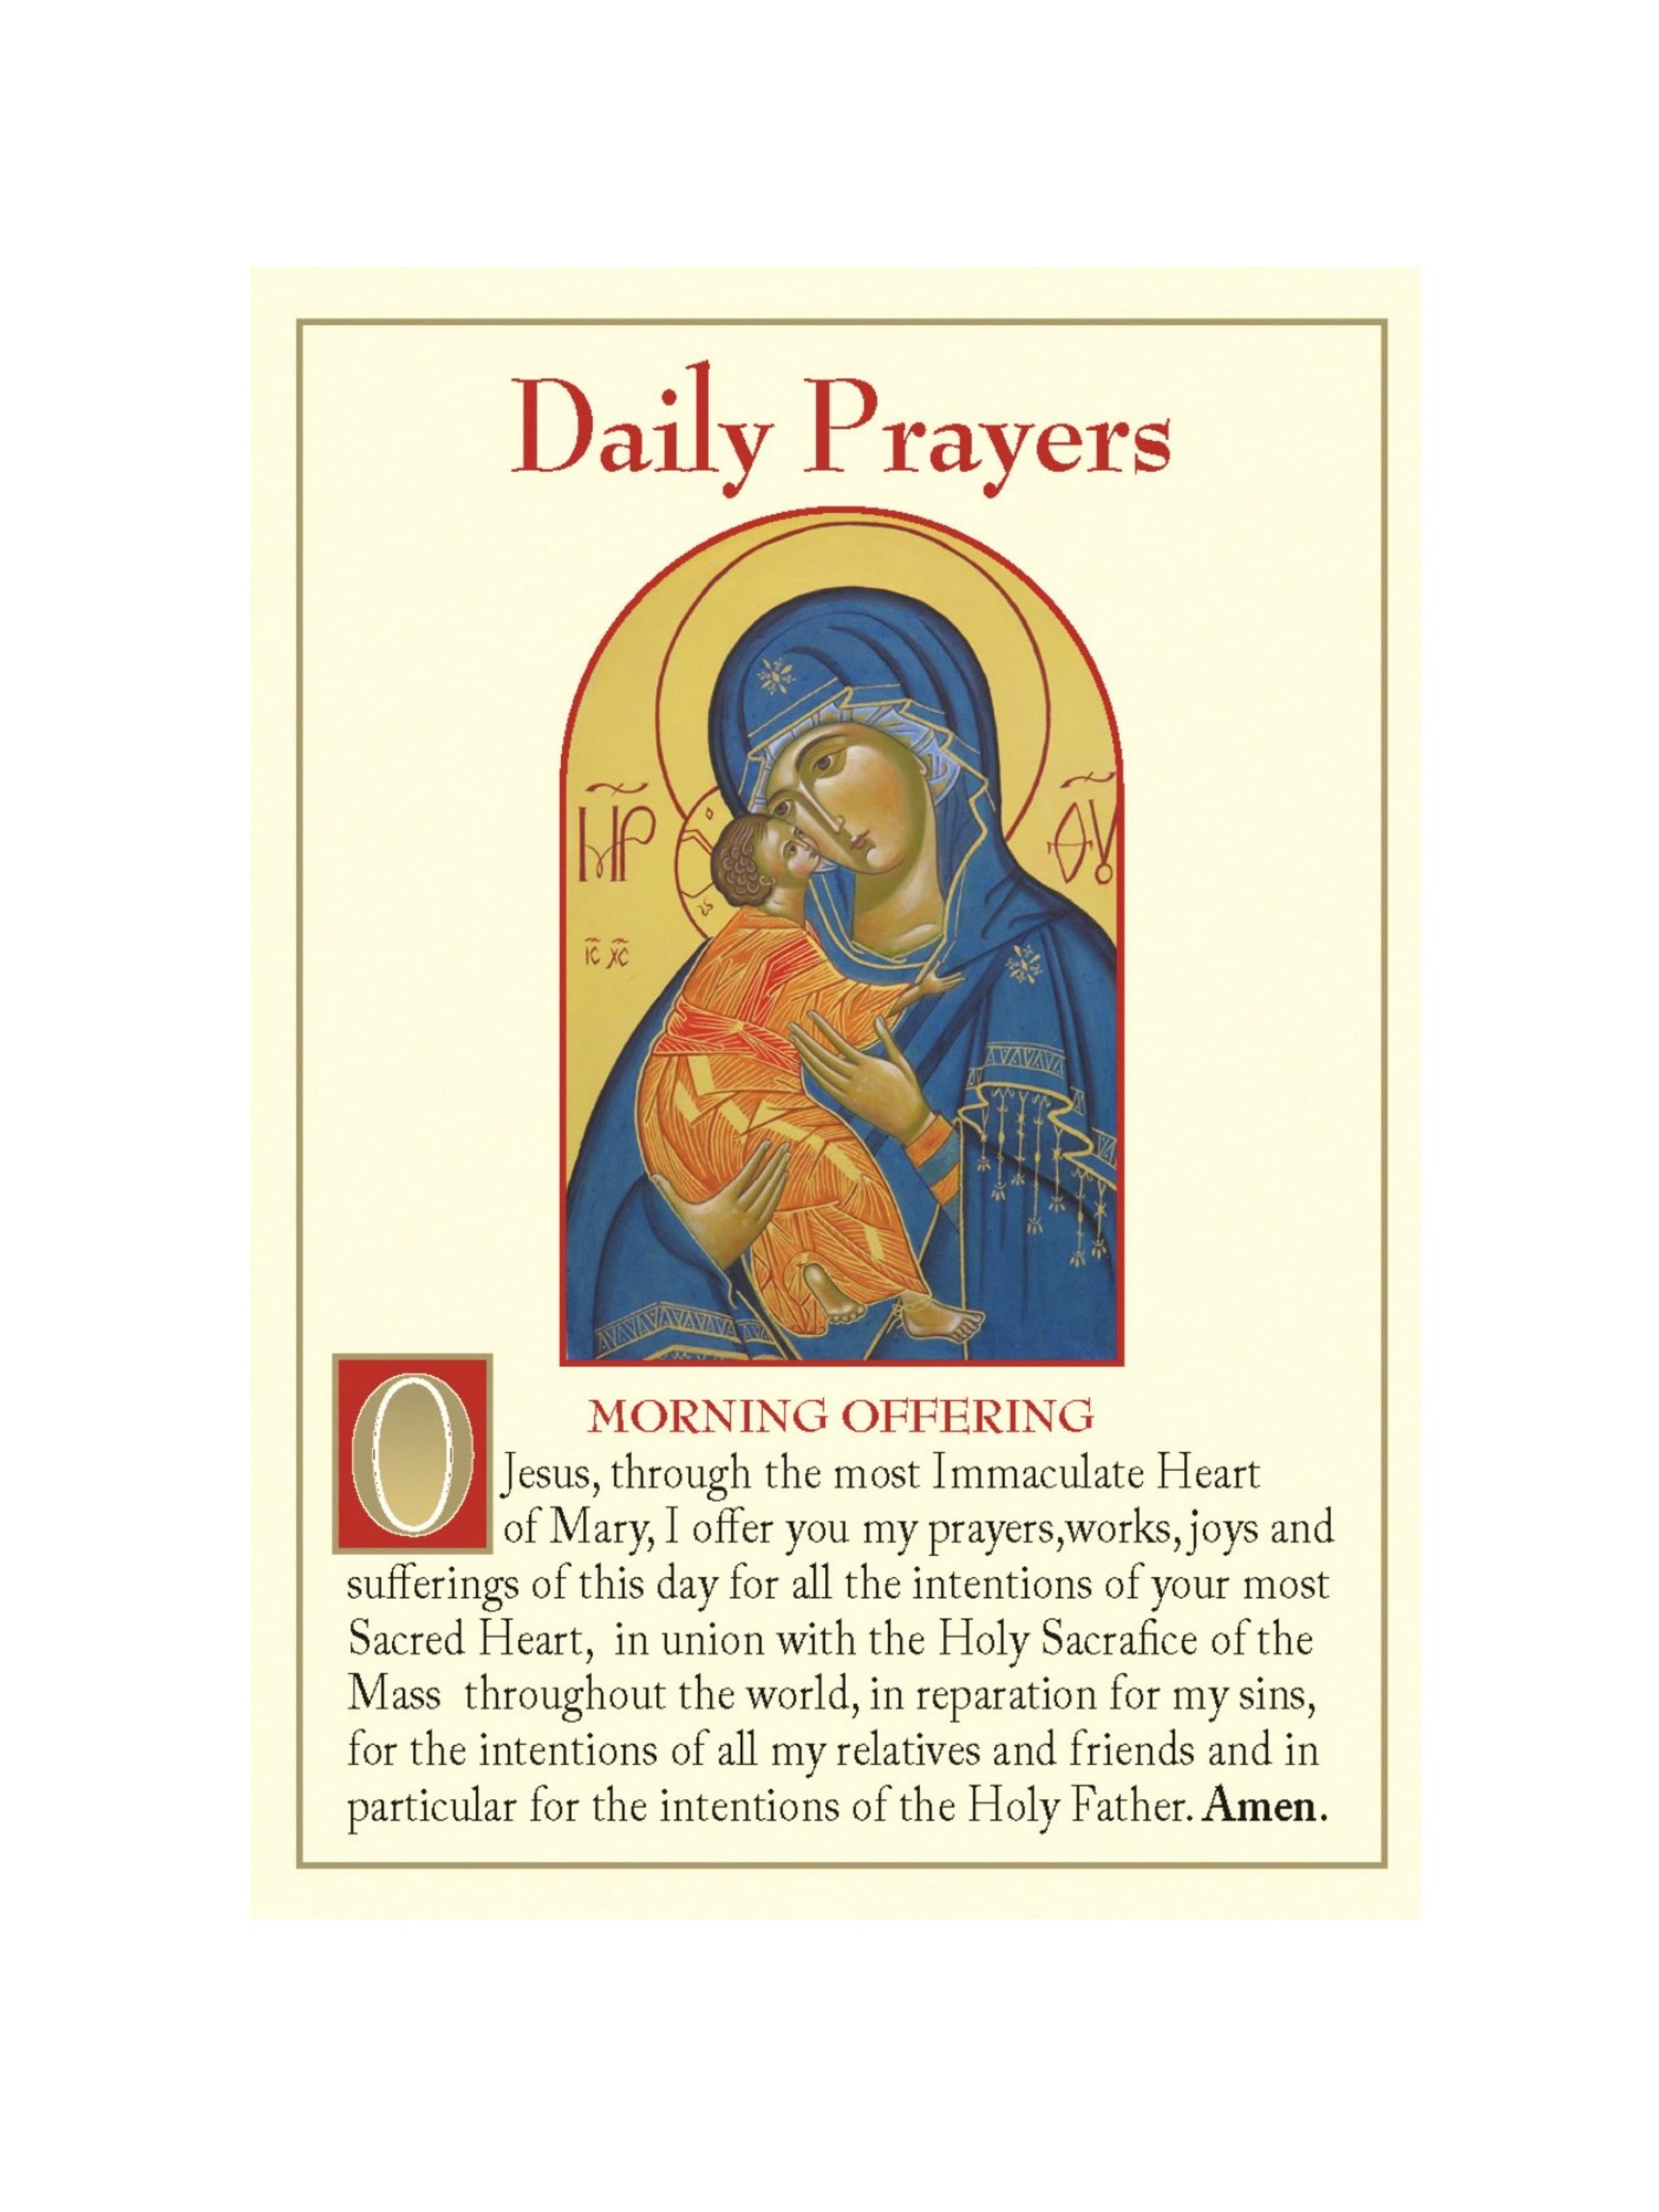 Daily Prayers Leaflet